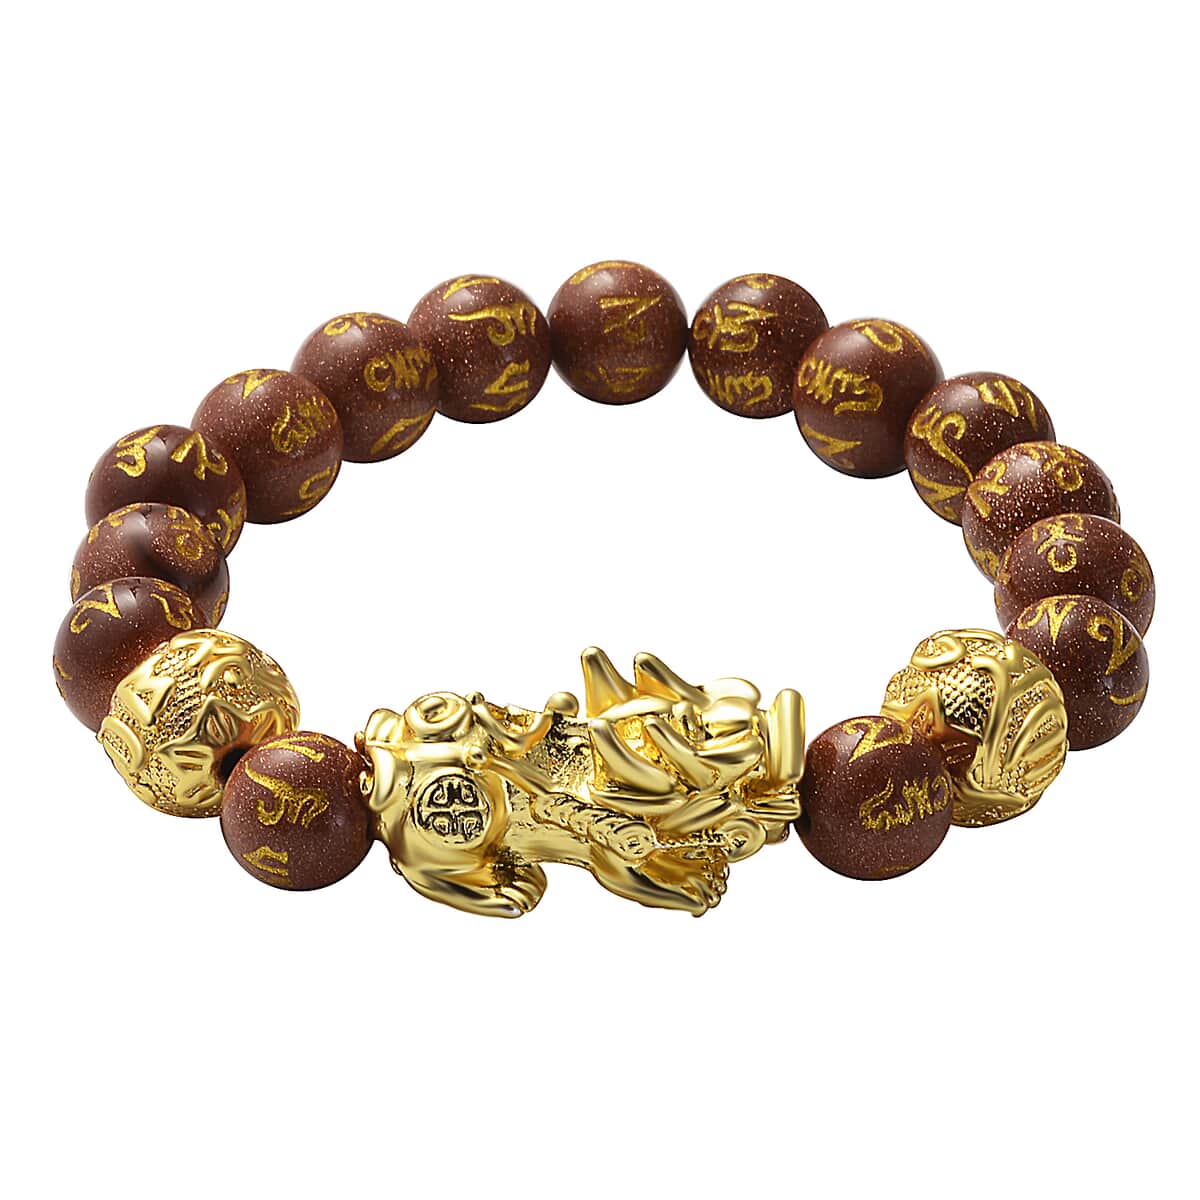 Feng Shui Pixiu Charm Gold Sandstone Carved Beads Stretch Bracelet in Goldtone, Stretchable Bracelet, Good Luck Birthday Gift 129.00 ctw image number 0